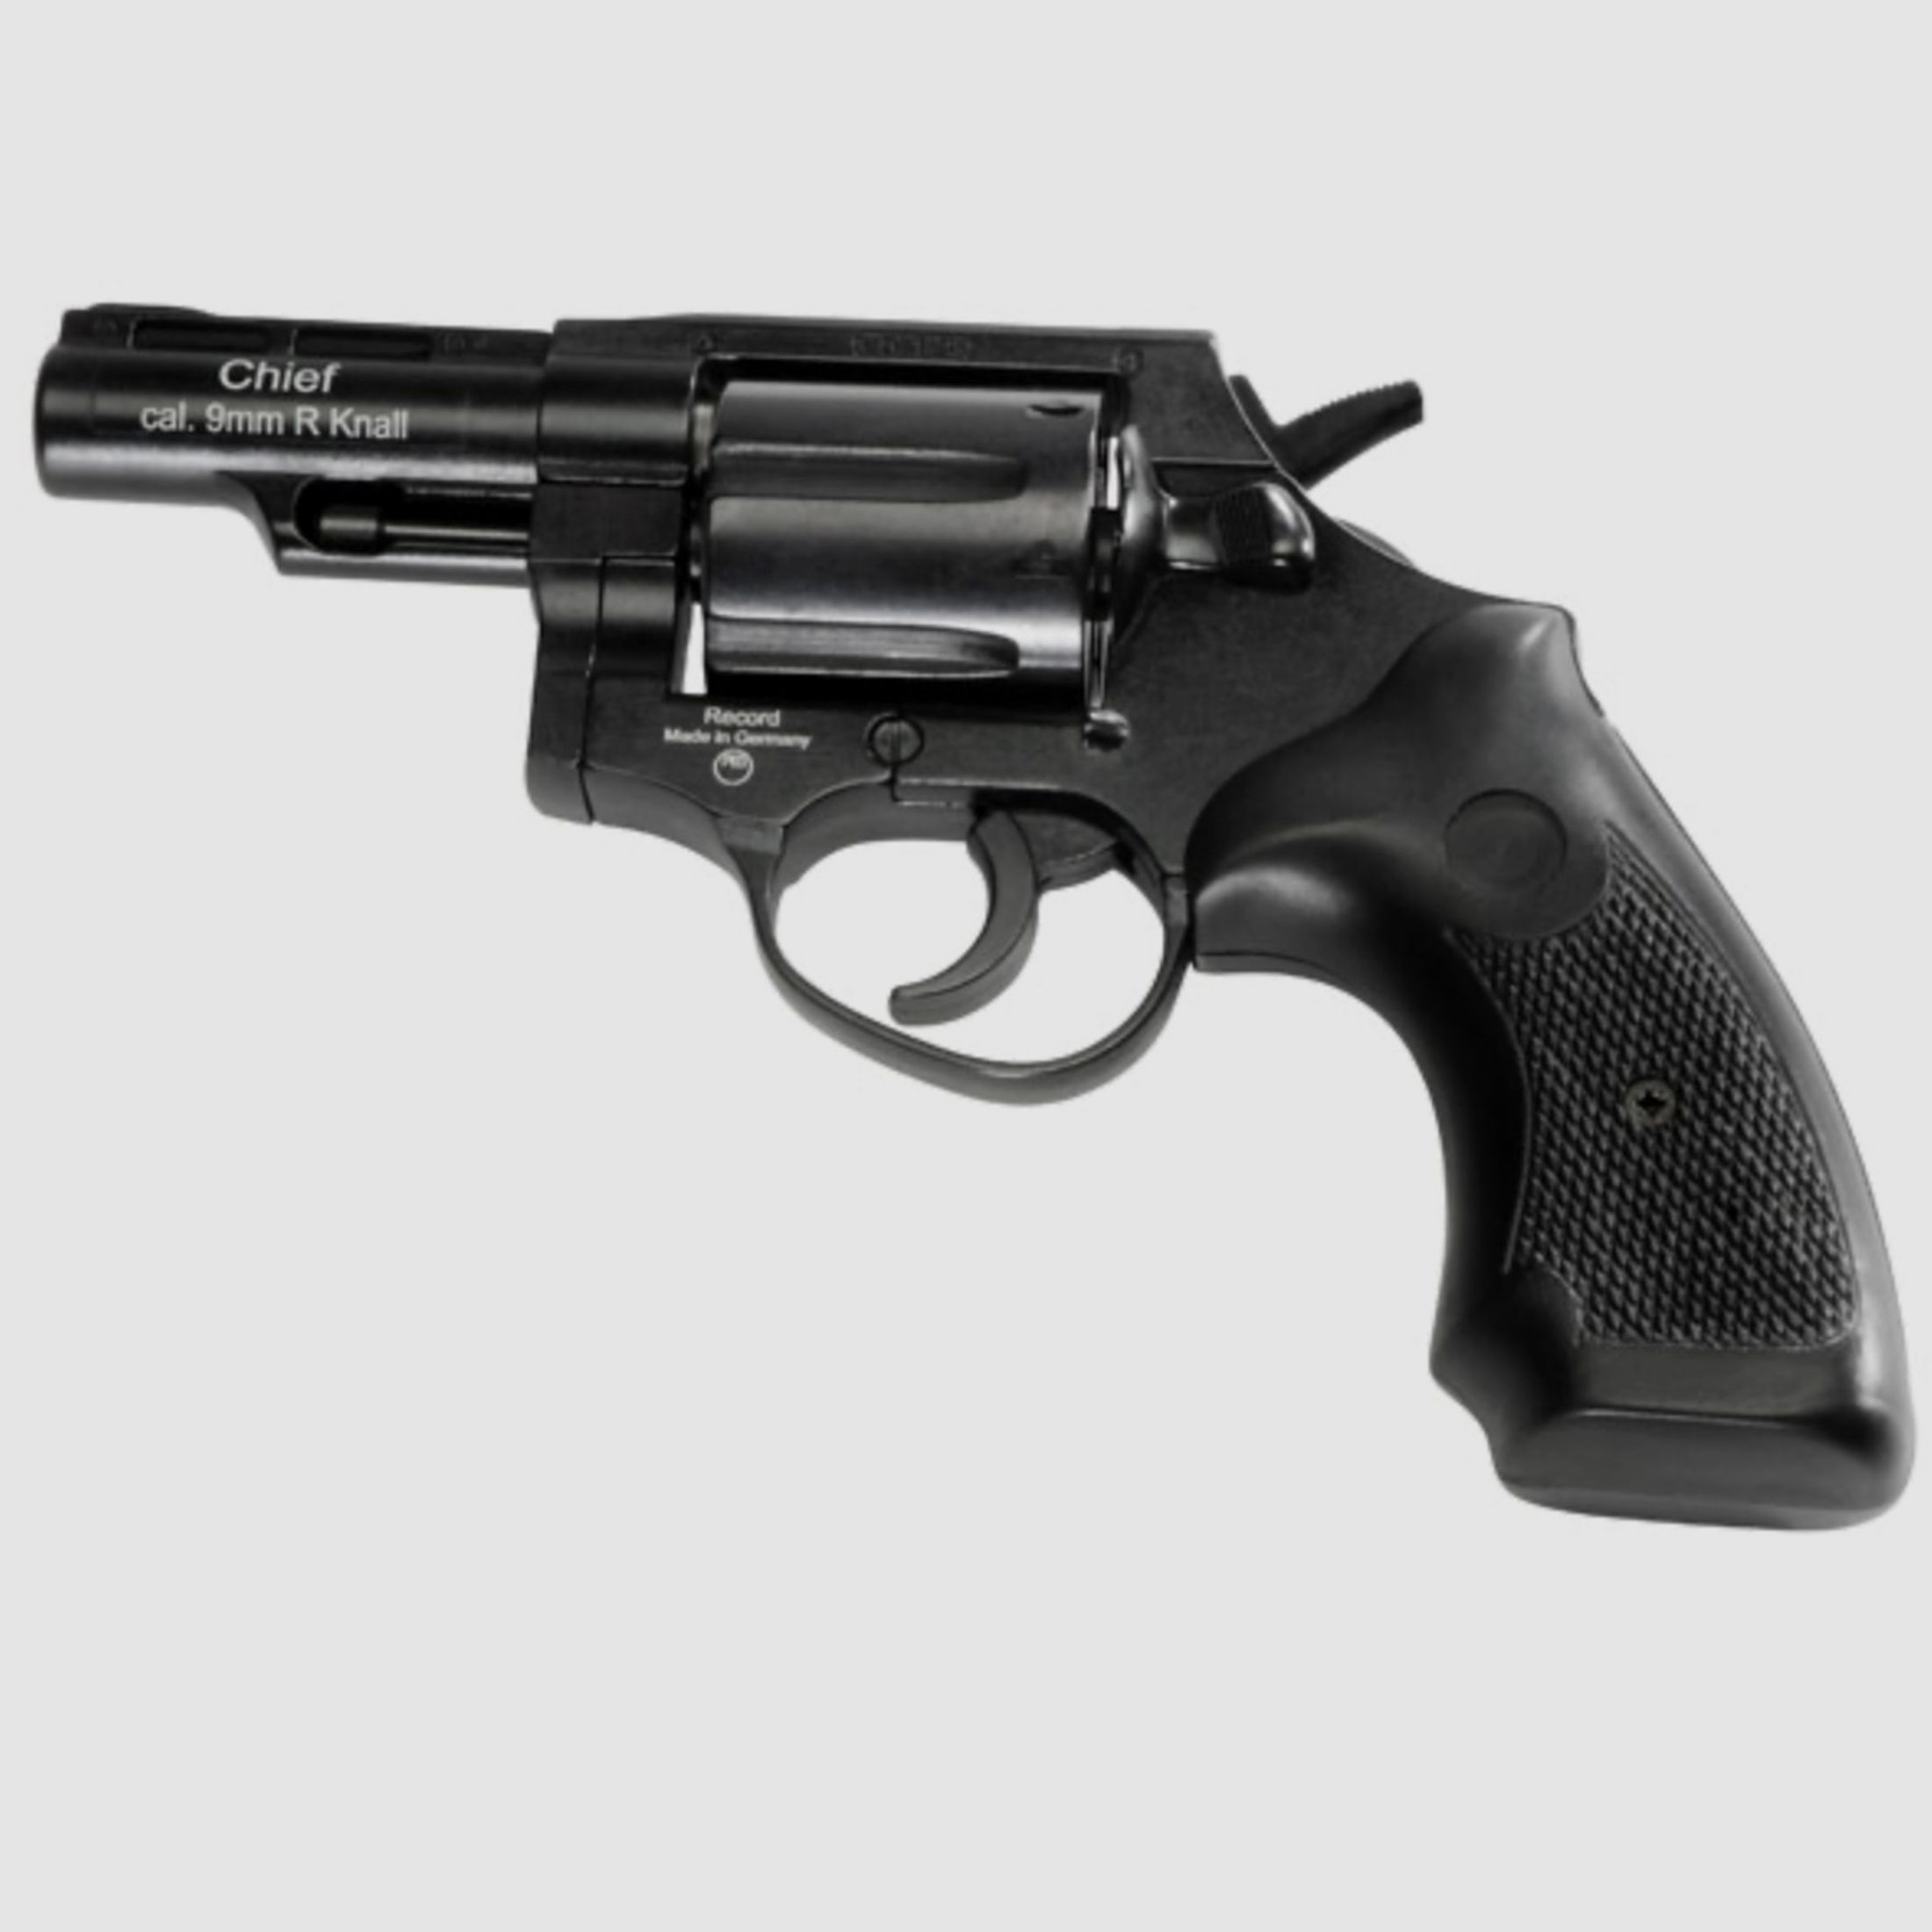 RECORD Revolver Chief 2" brüniert 9mm R Knall Schreckschussrevolver